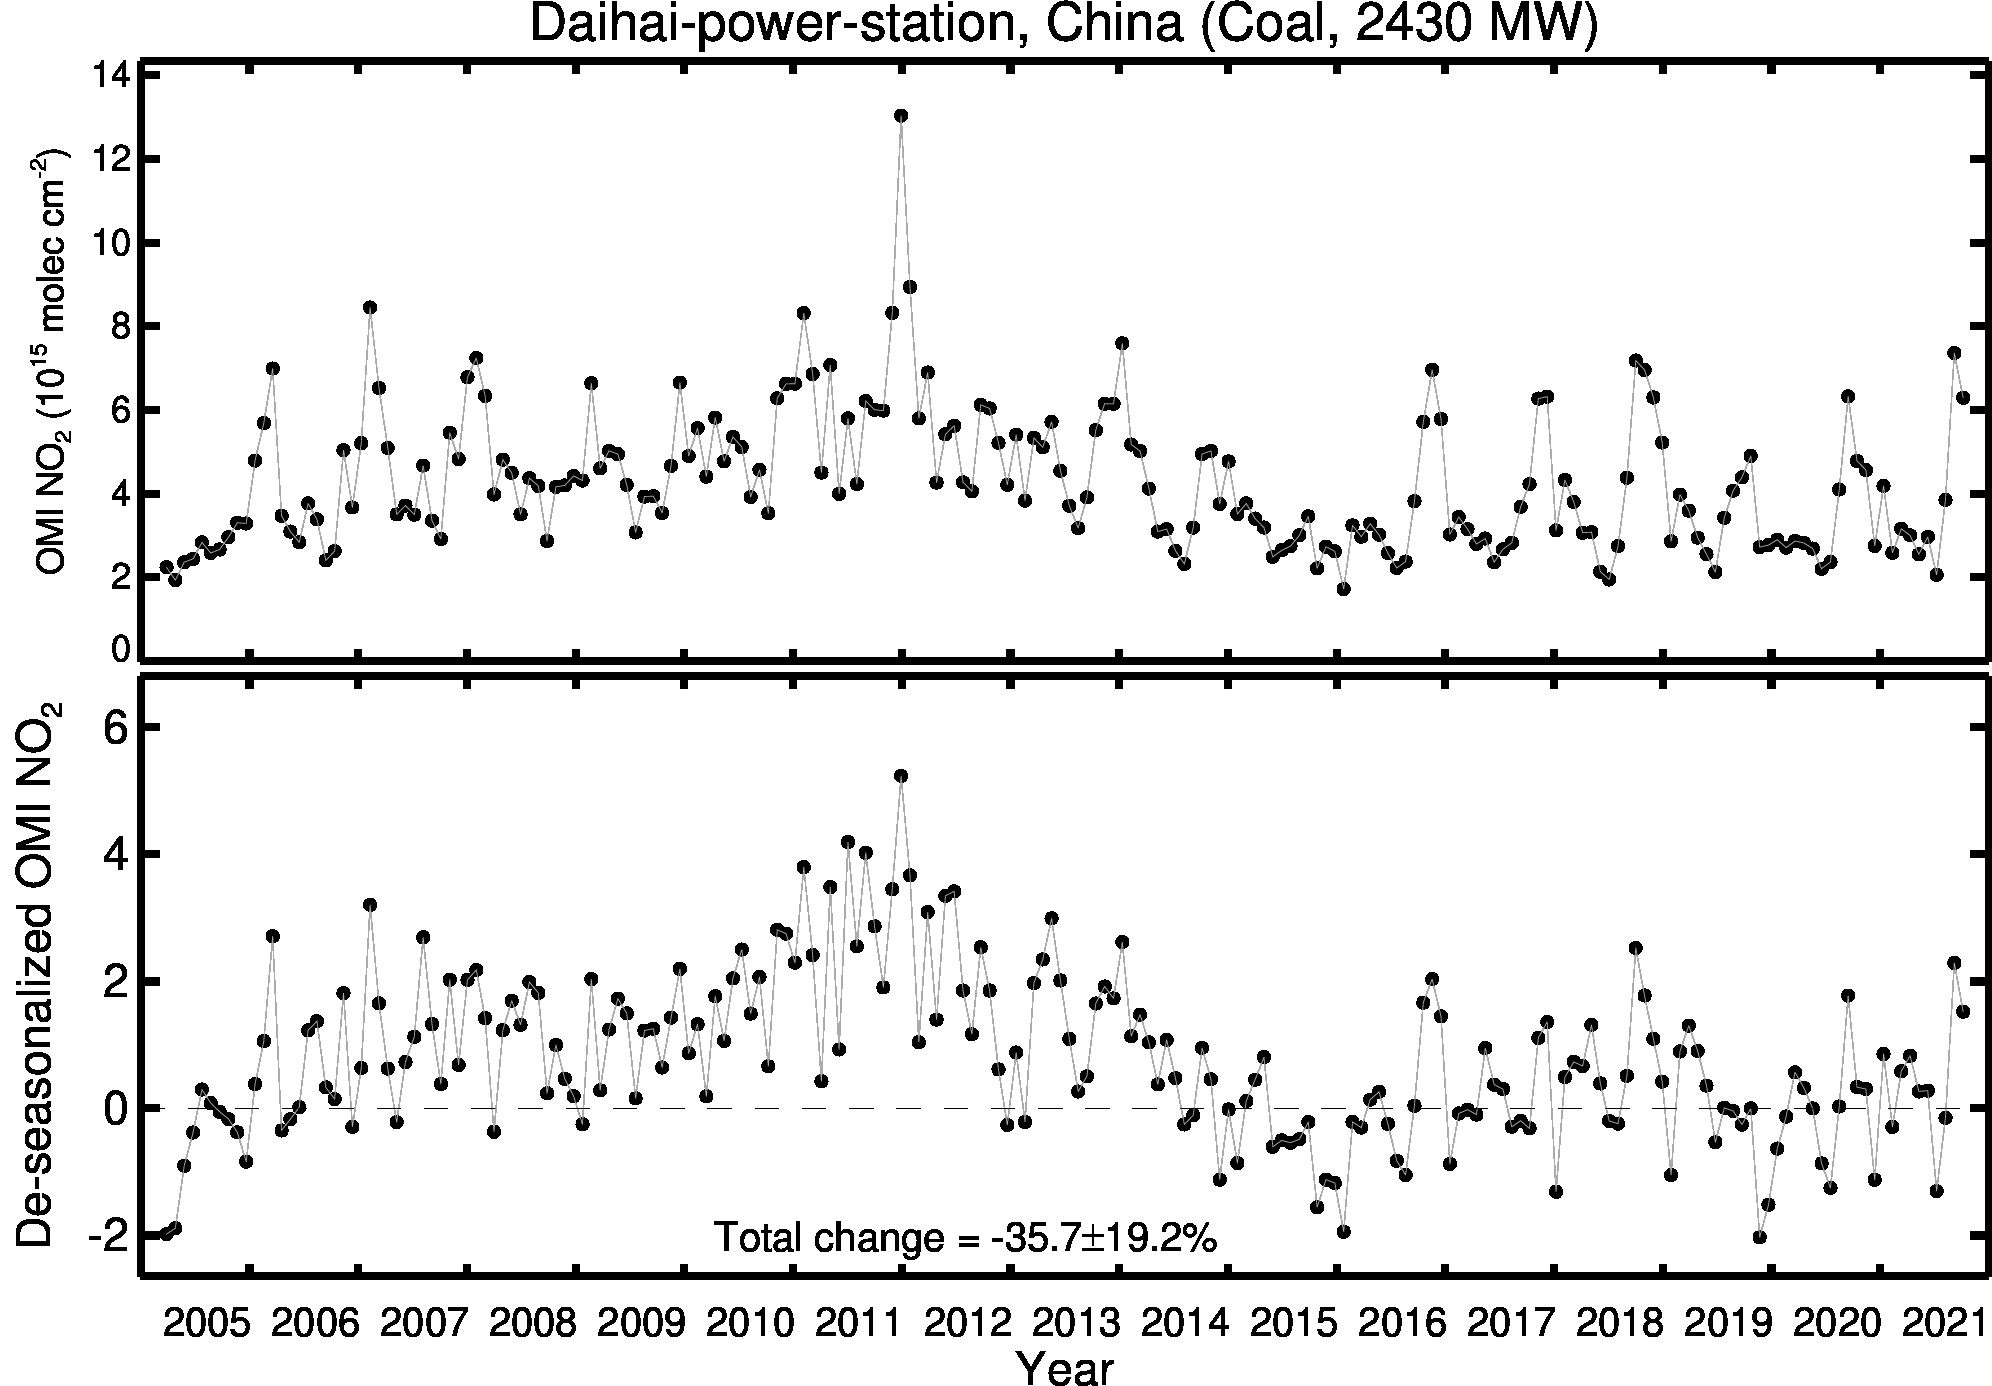 Daihai power station Line Plot 2005-2021